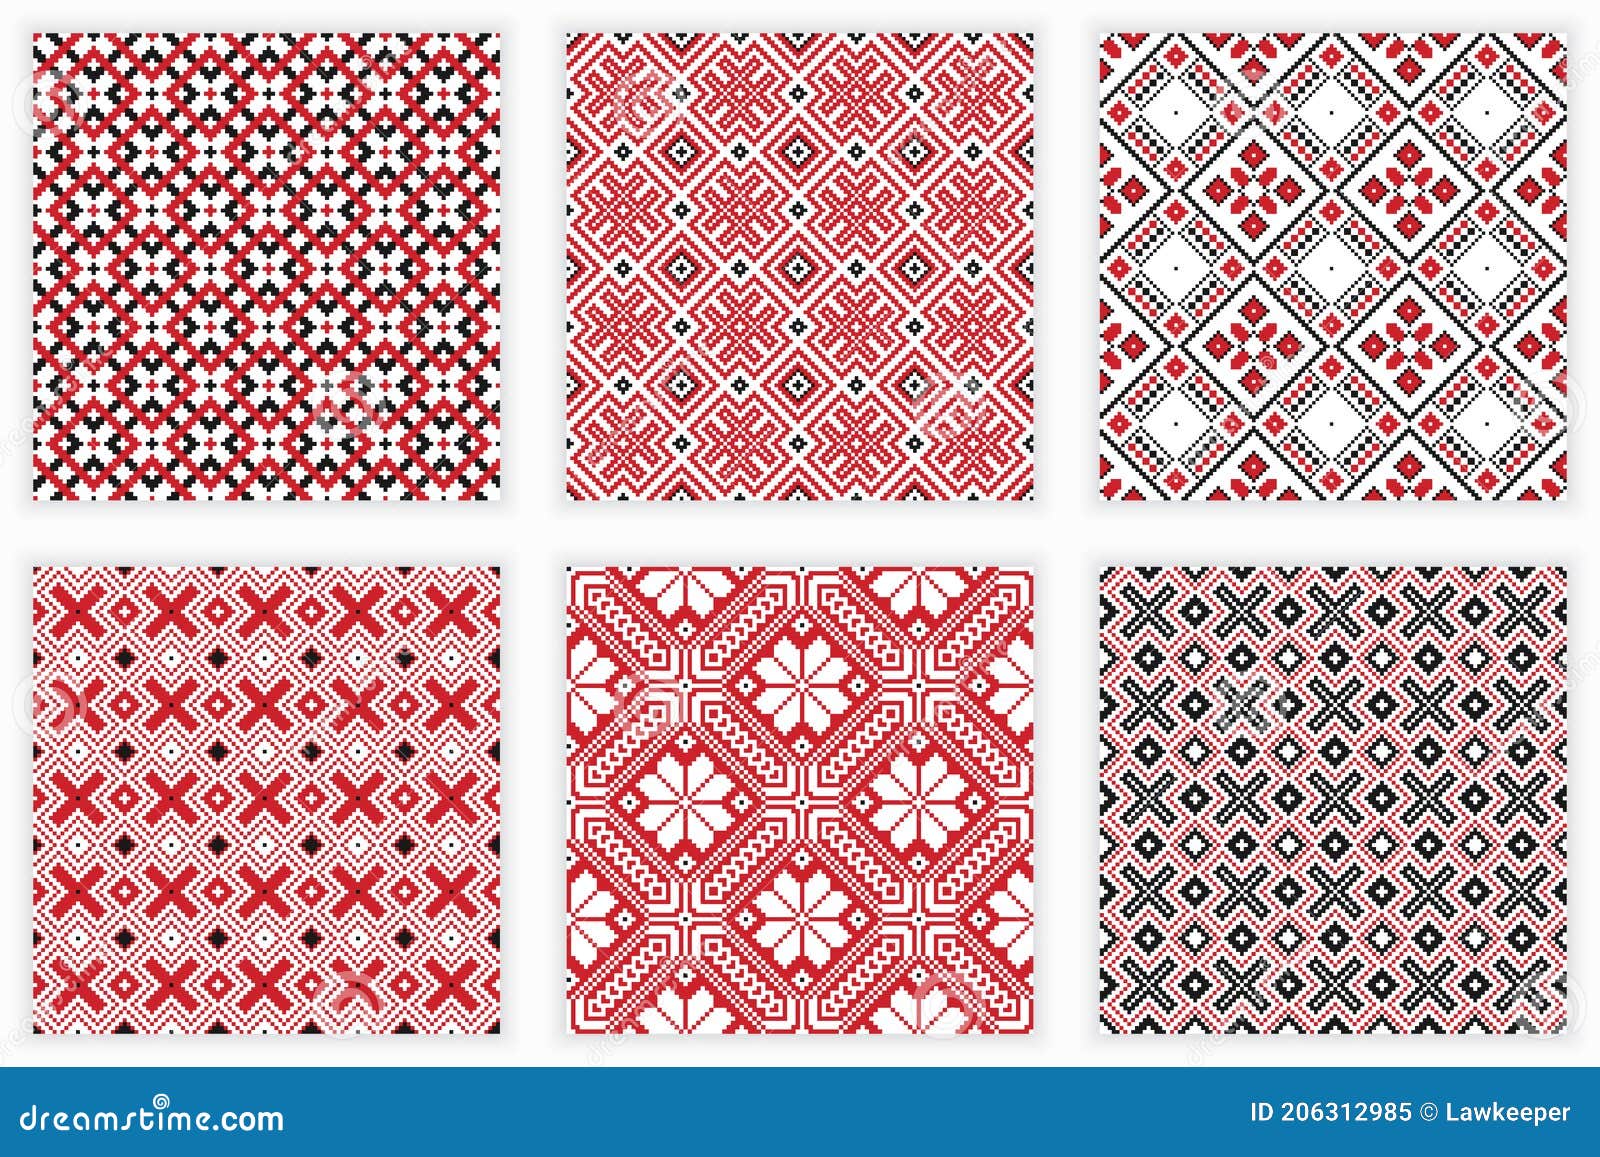 slavic folk embroidery seamless patterns set